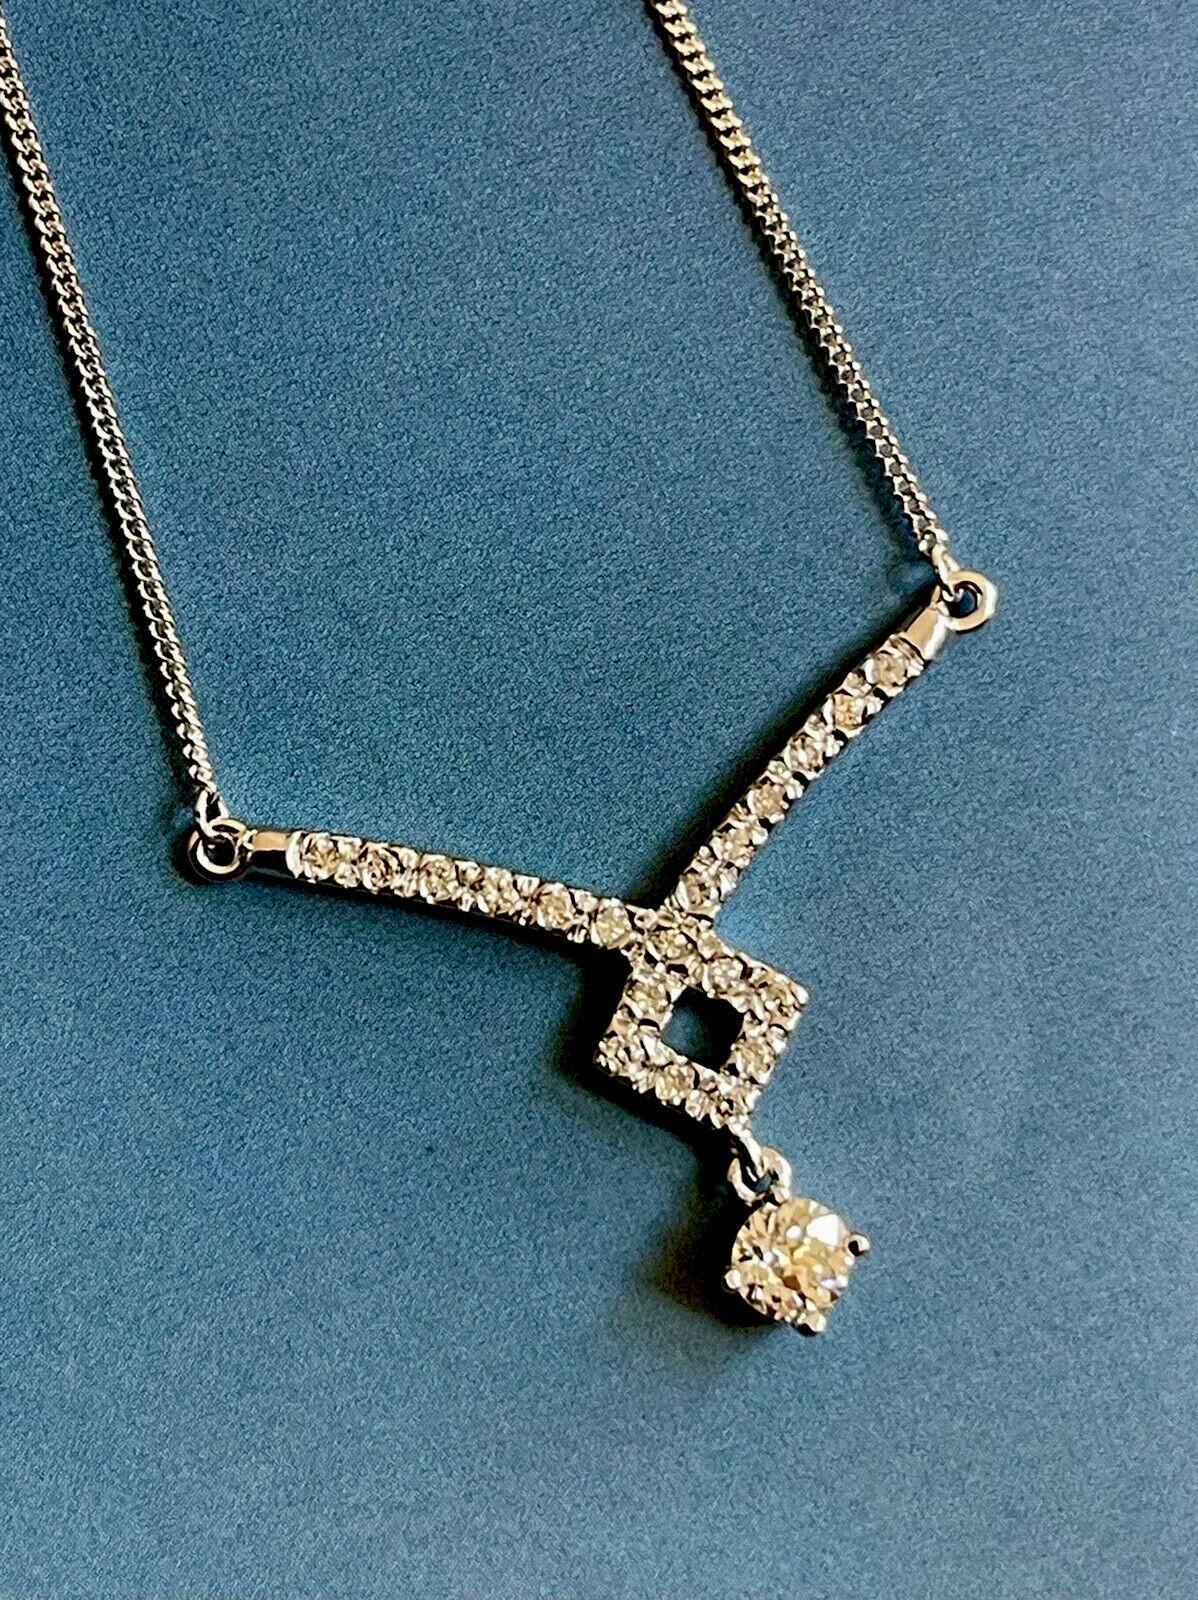 18ct White Gold Solitaire Diamond Necklace 0.50ct Chocker VS 16” Half Carat For Sale 3